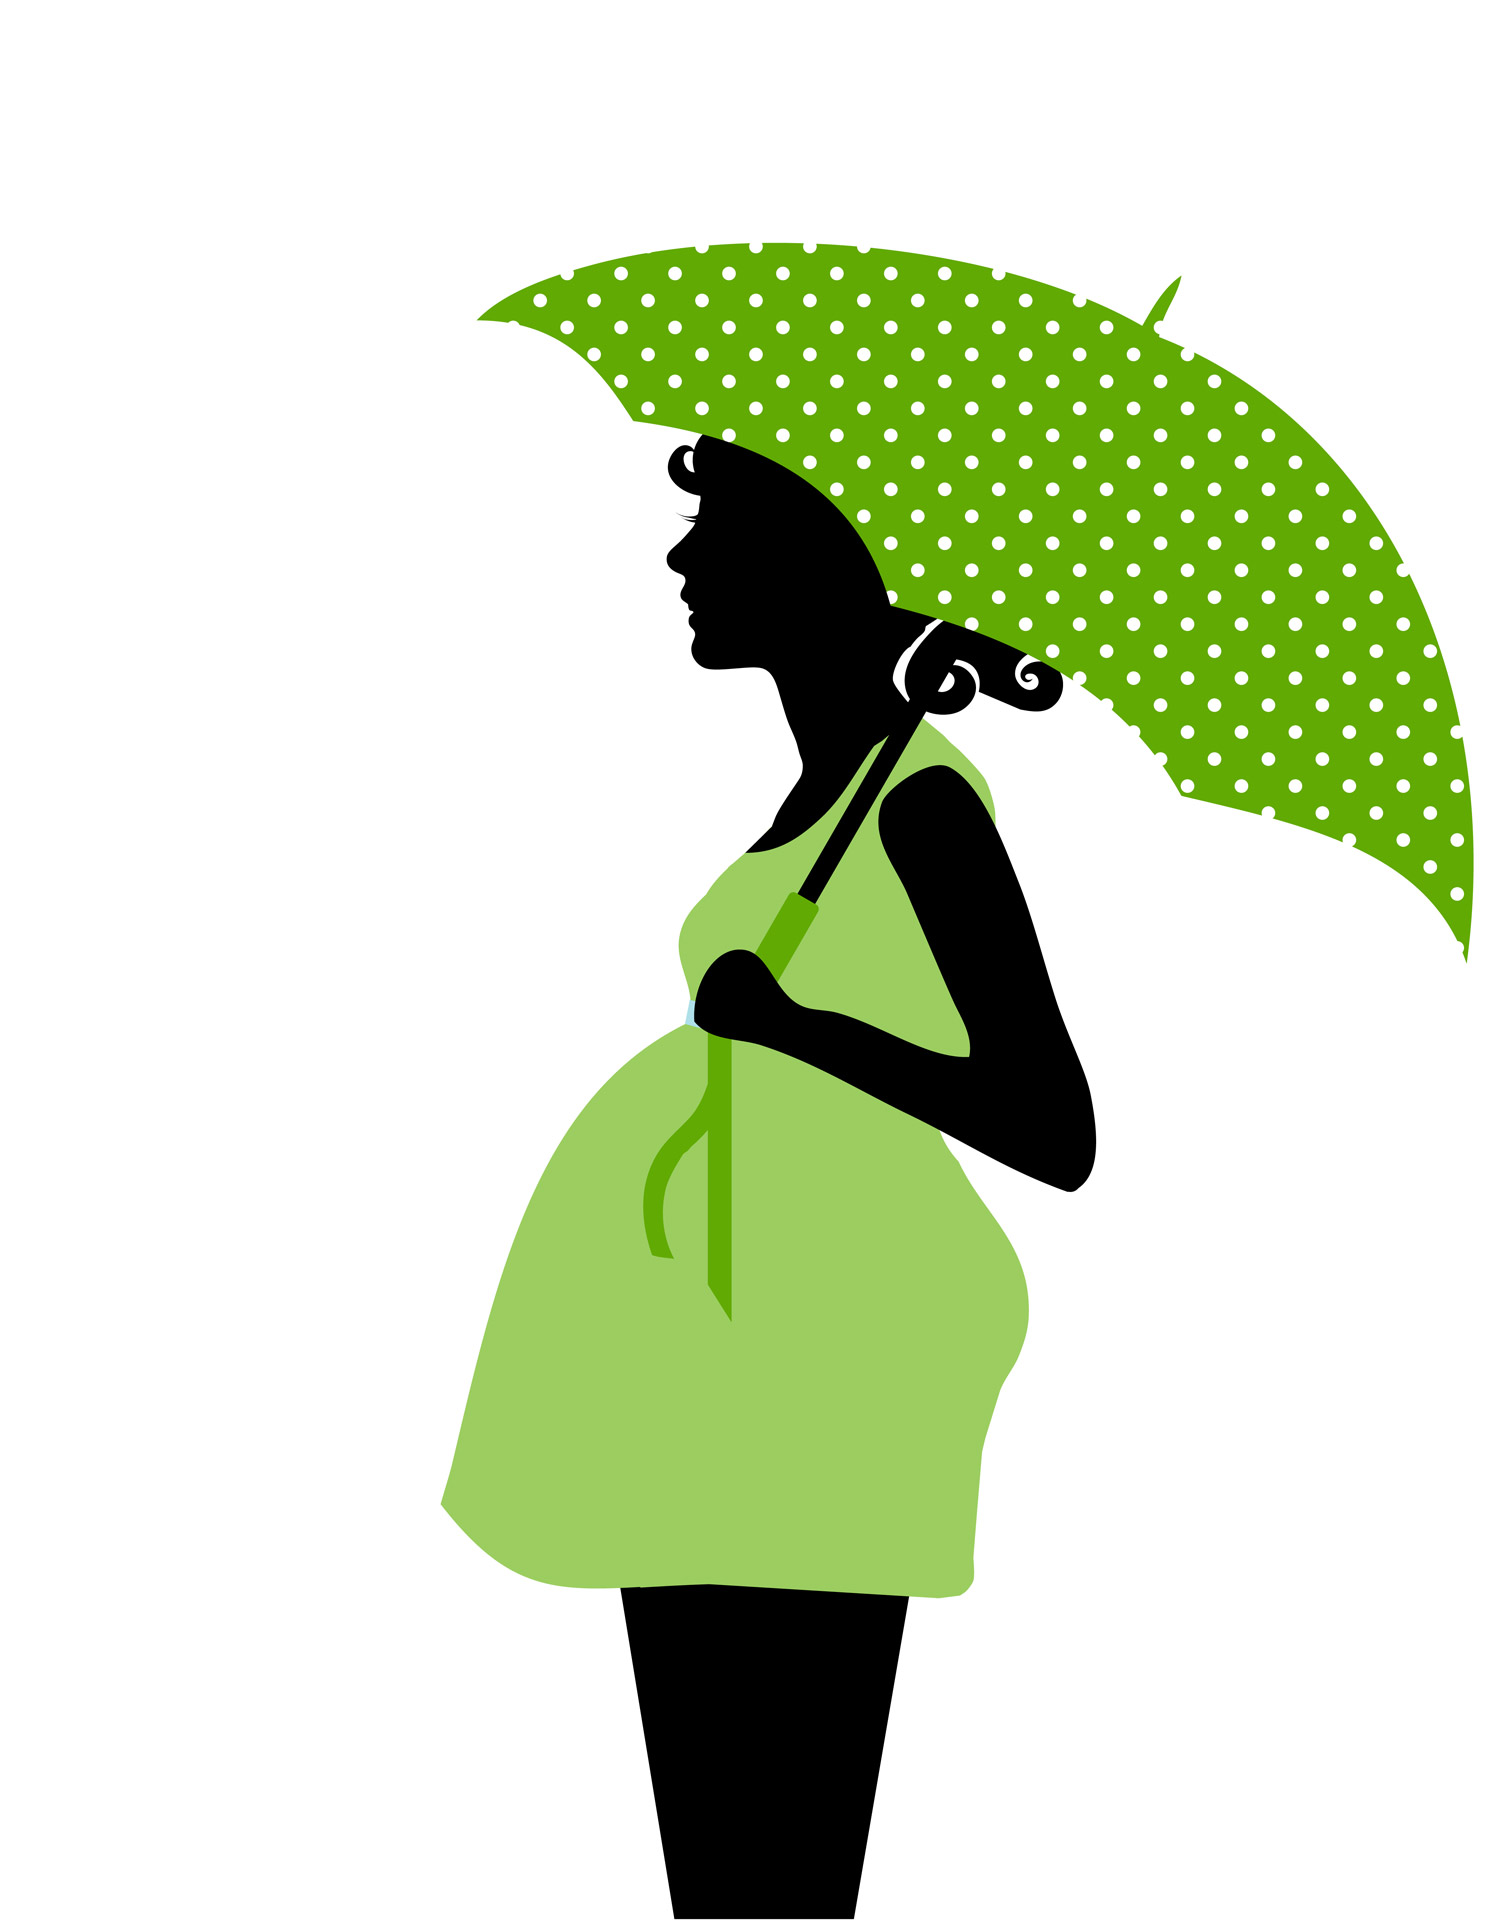 Pregnant Woman Silhouette Clipart Free Stock Photo.